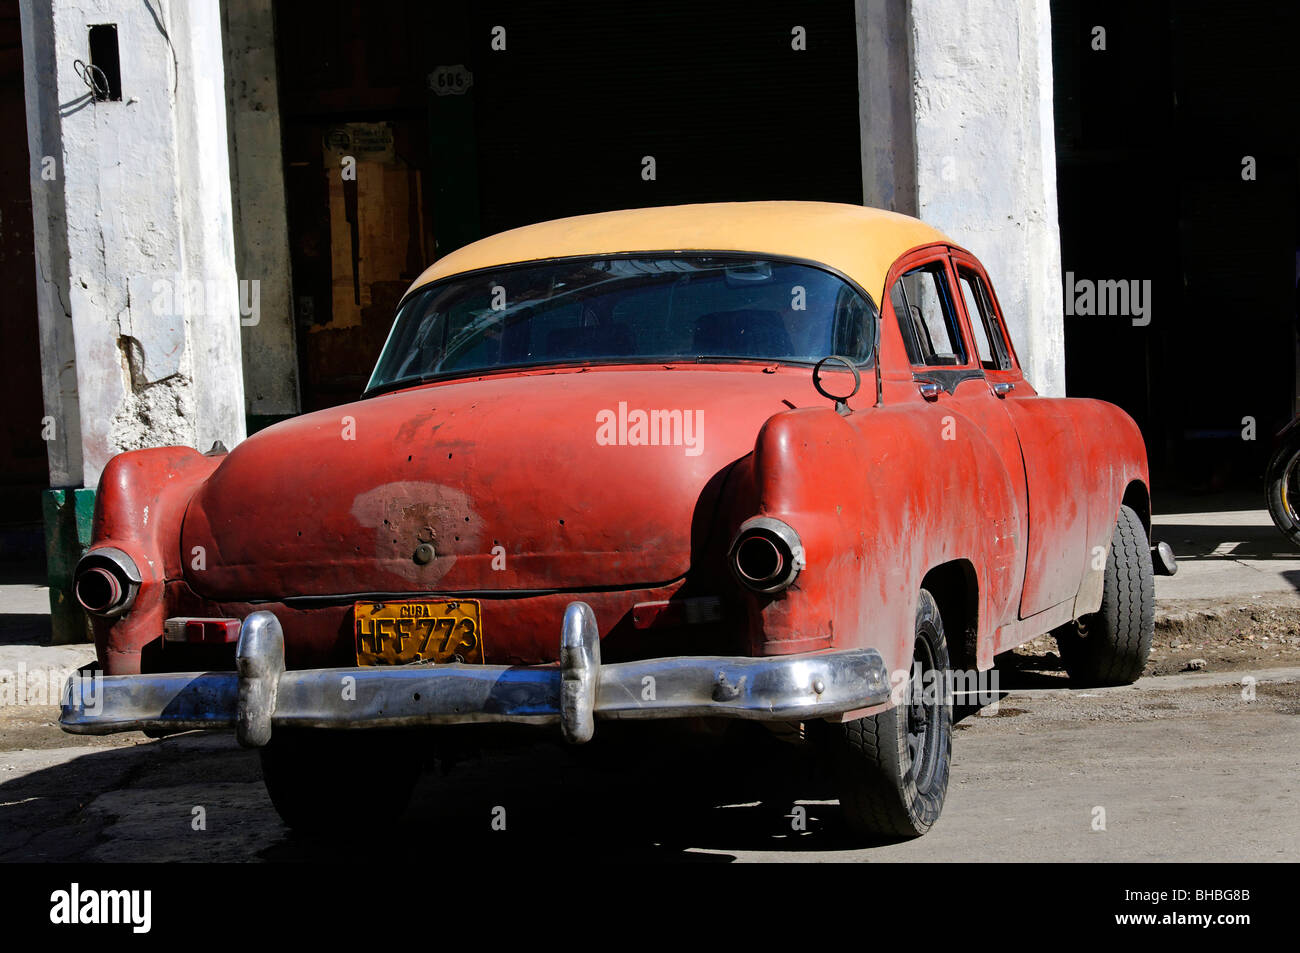 Old American car, Havana, Cuba Stock Photo